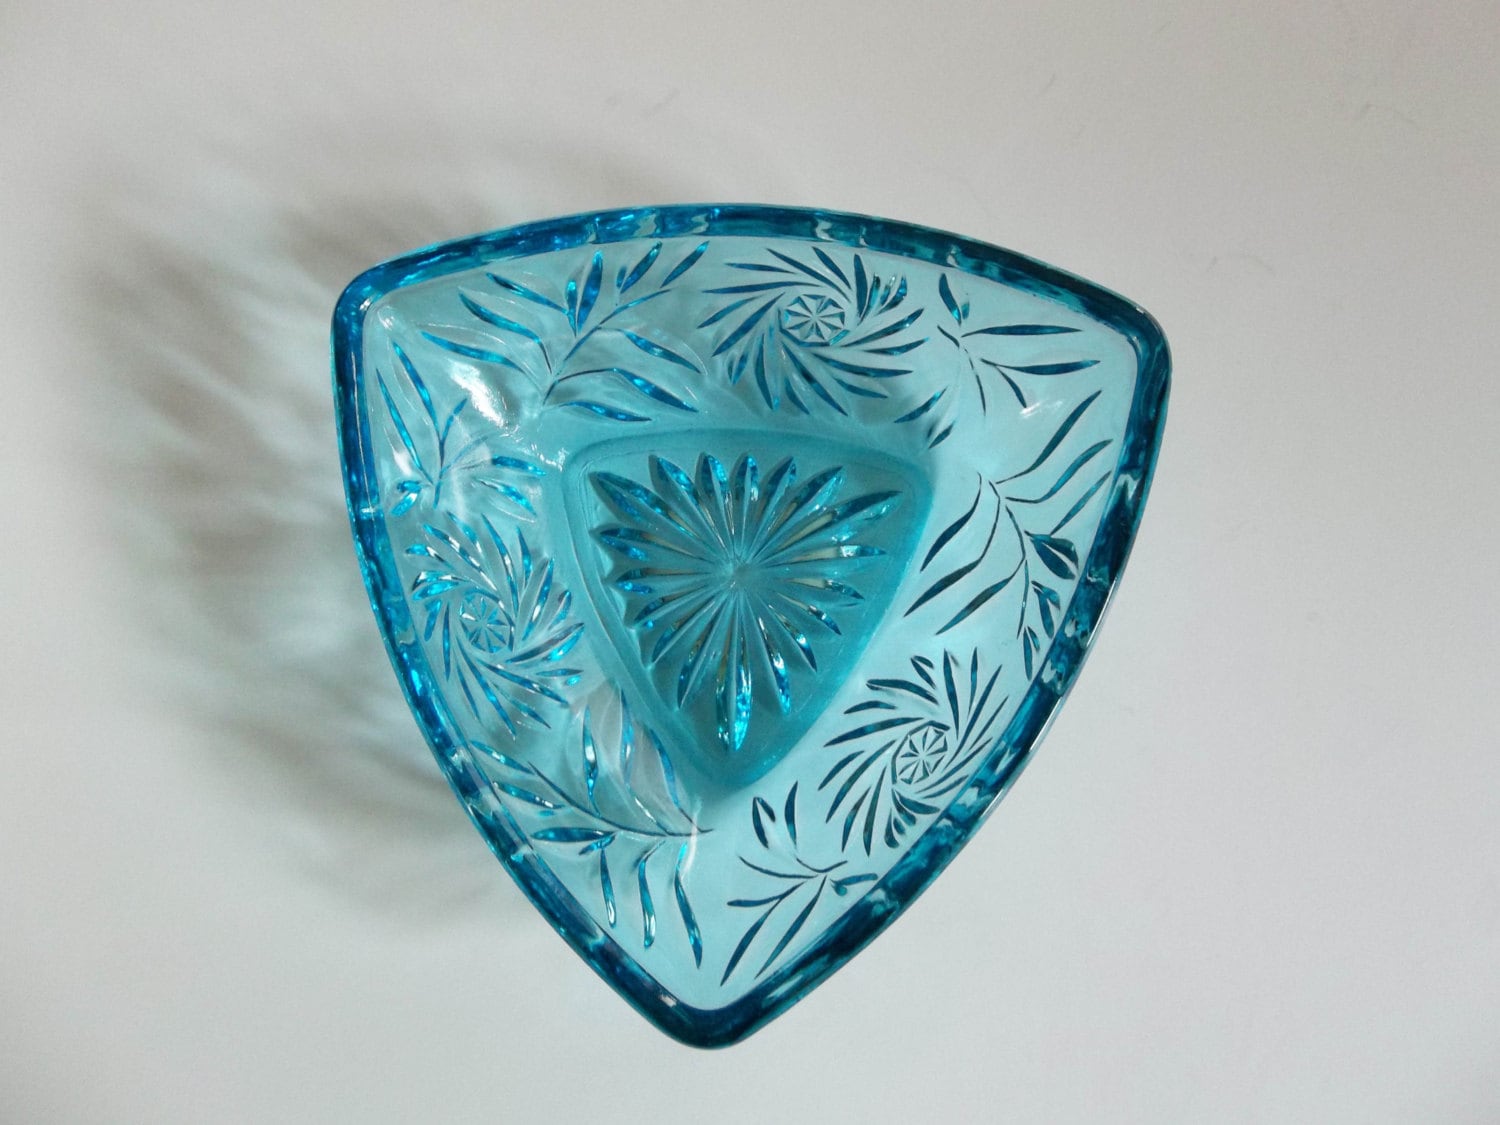 Aqua Blue Depression Glass Candy Dish Vintage